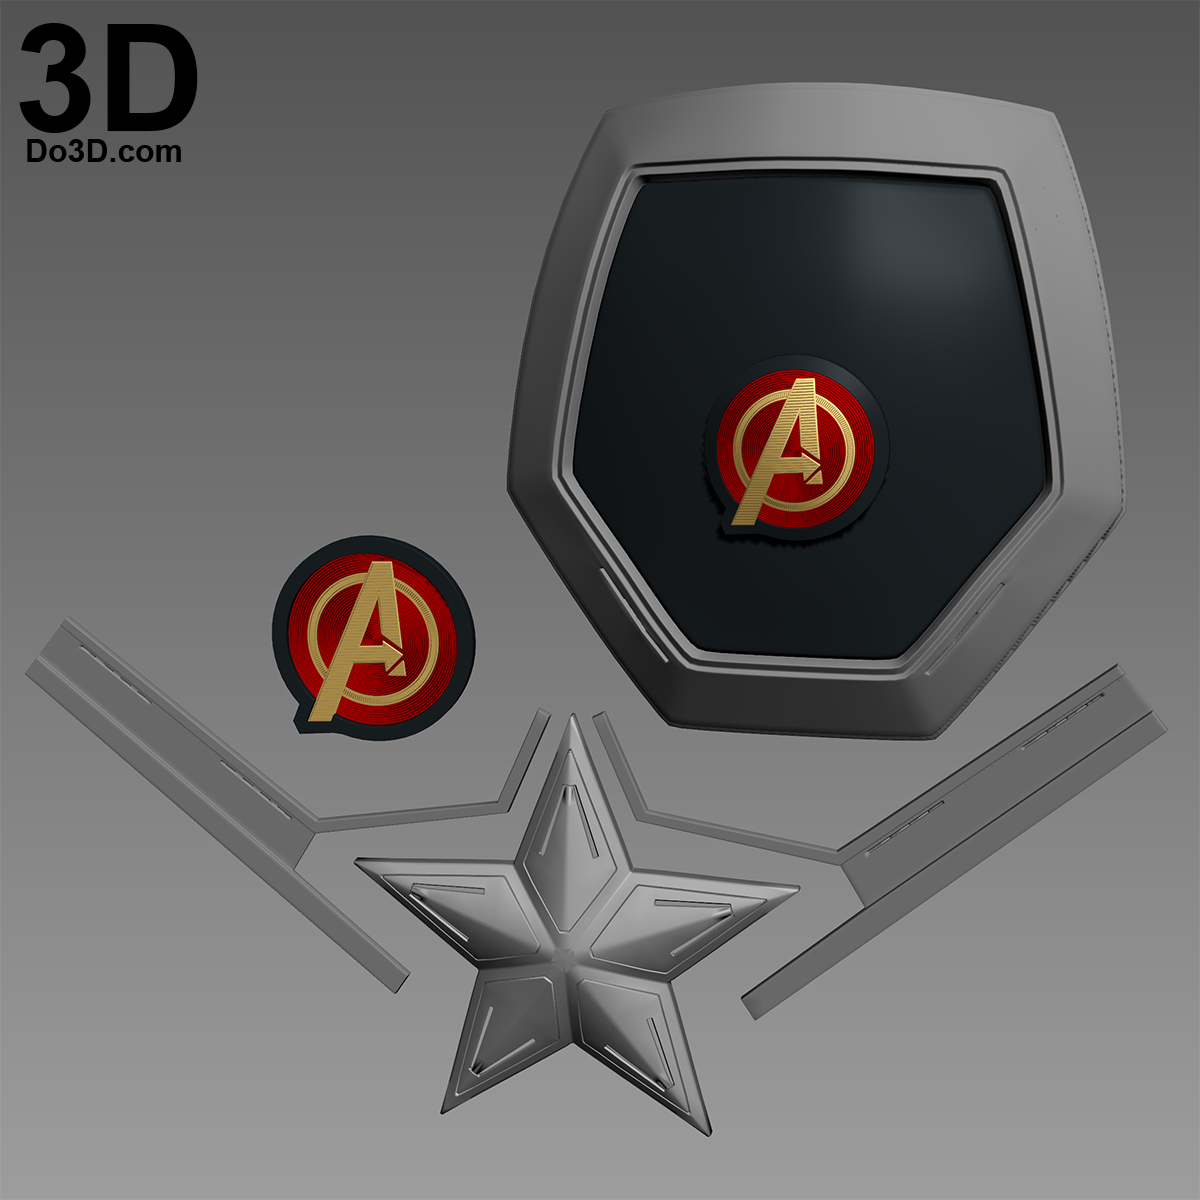 3D Printable Model: Shoulder Emblem from Captain Civil Do3D Avengers Format: And Logo Piece STL Armor, America Print War| – Star File Chest Portfolio